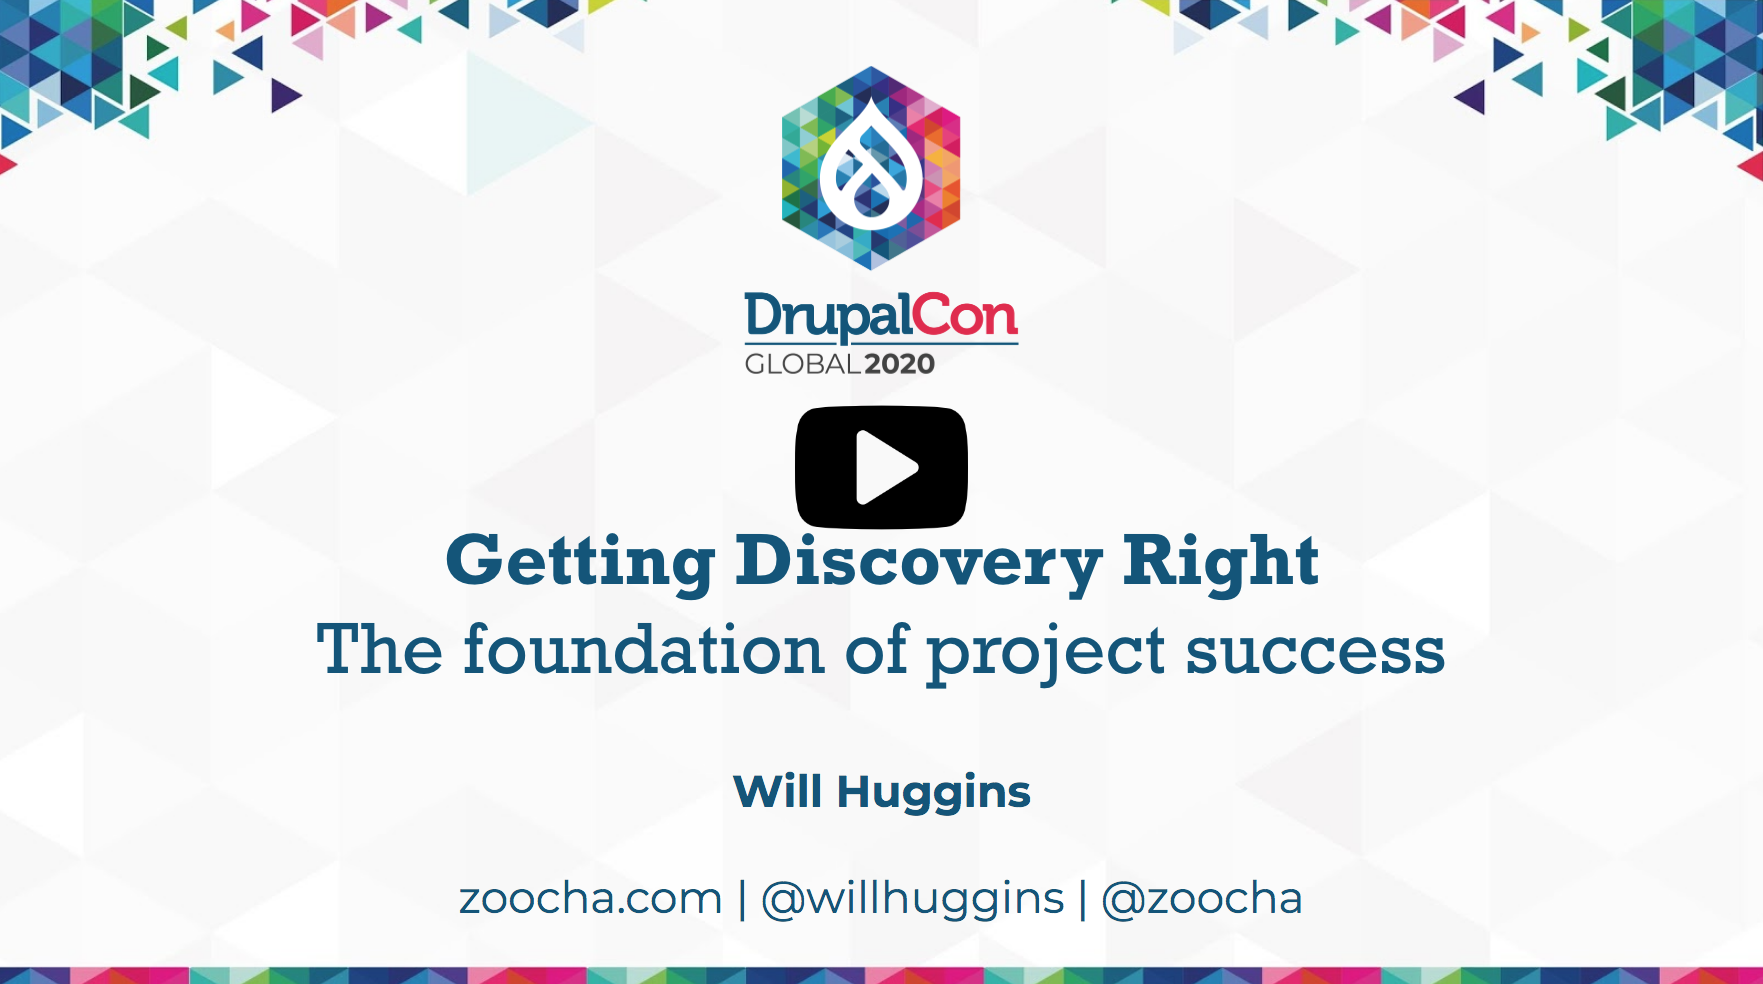 Drupalcon Global Zoocha Session